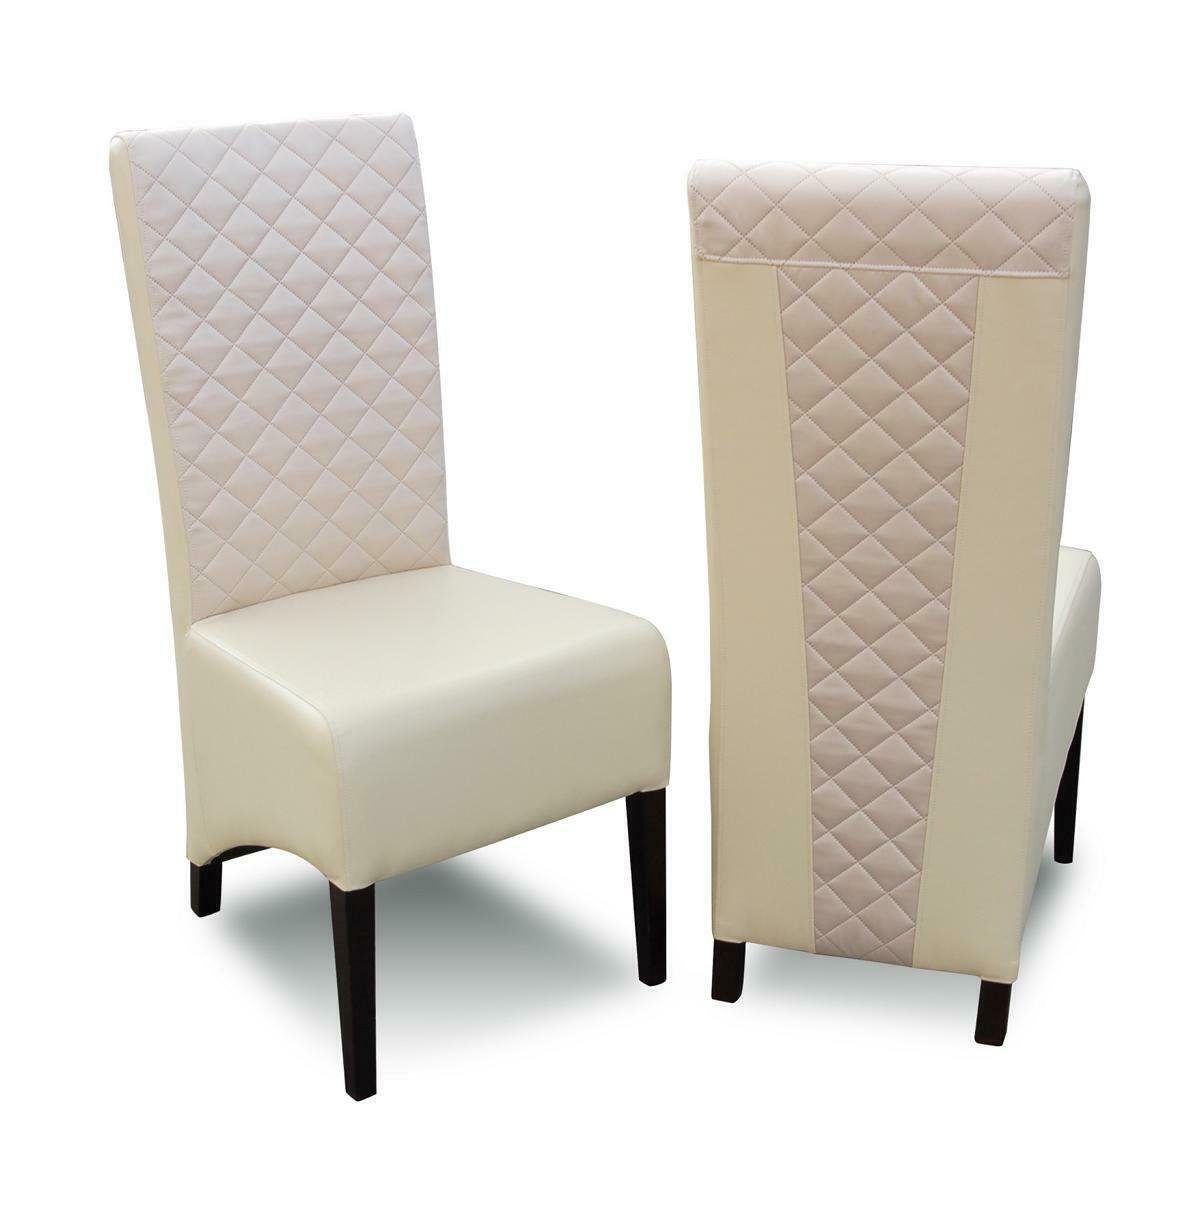 4xStuhl Gruppe Stühle JVmoebel Set Stuhl, Neu Garnitur Gepolsterte Esszimmer Leder Design Stühle